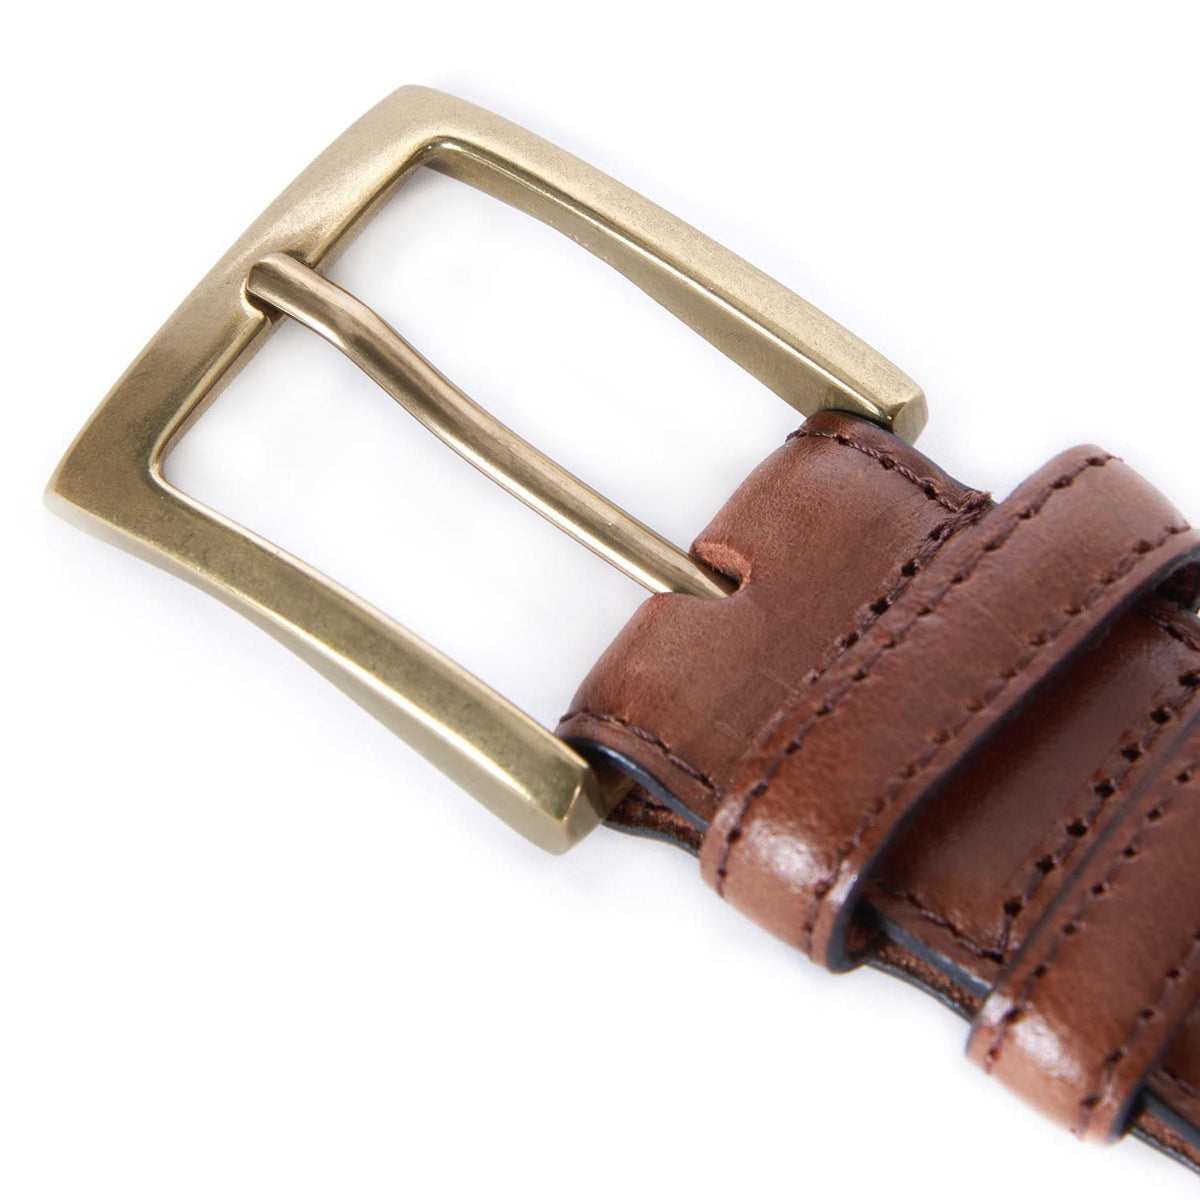 Barbour Leather Belt (Gift Box) | Dark Brown